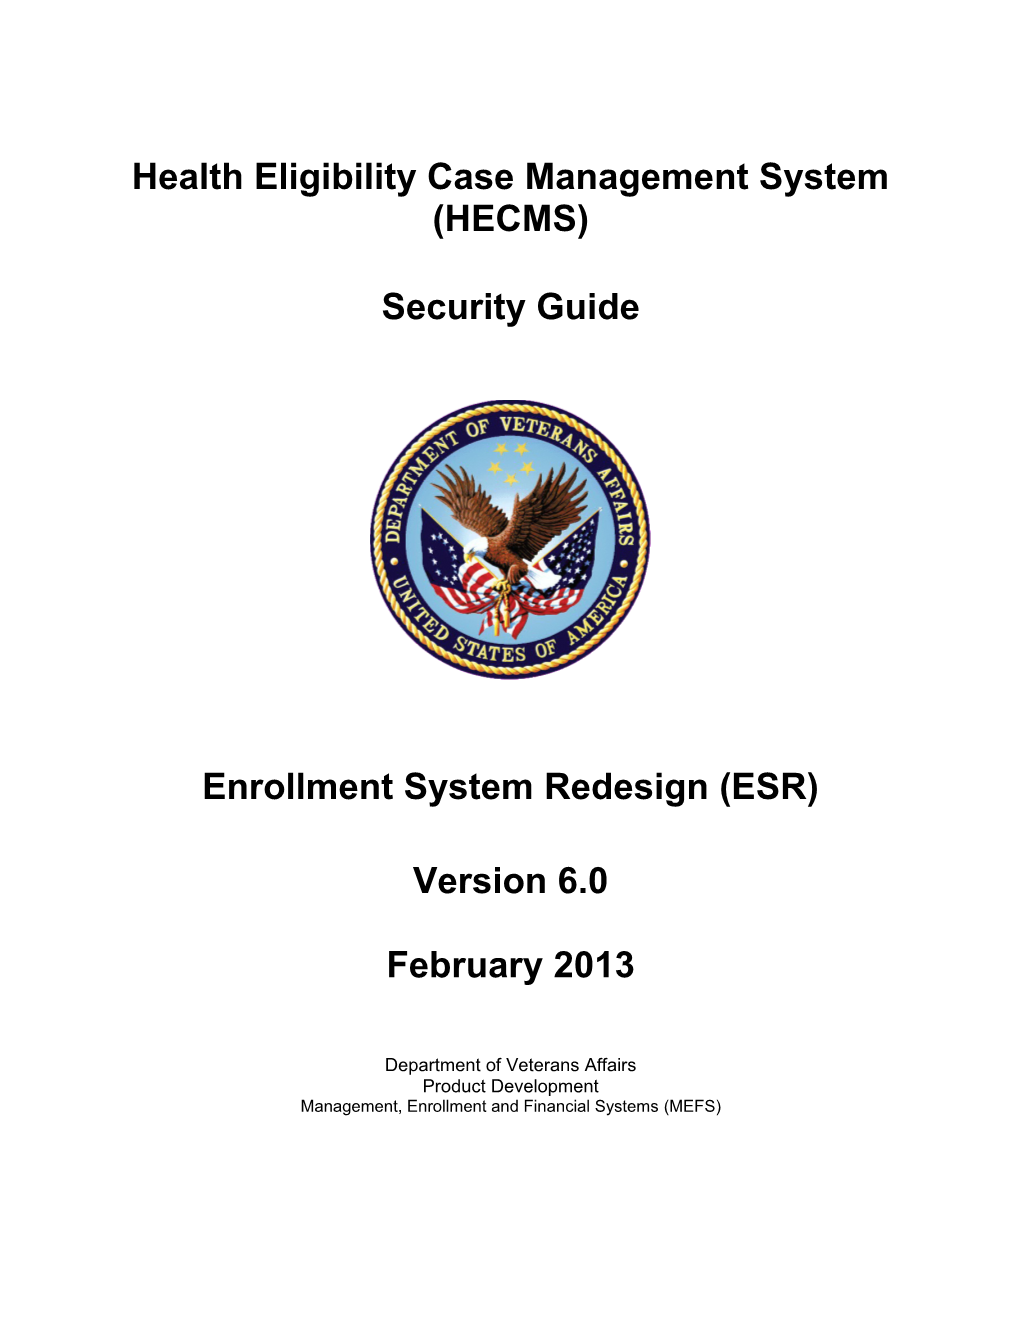 Health Eligibility Case Management System (HECMS)